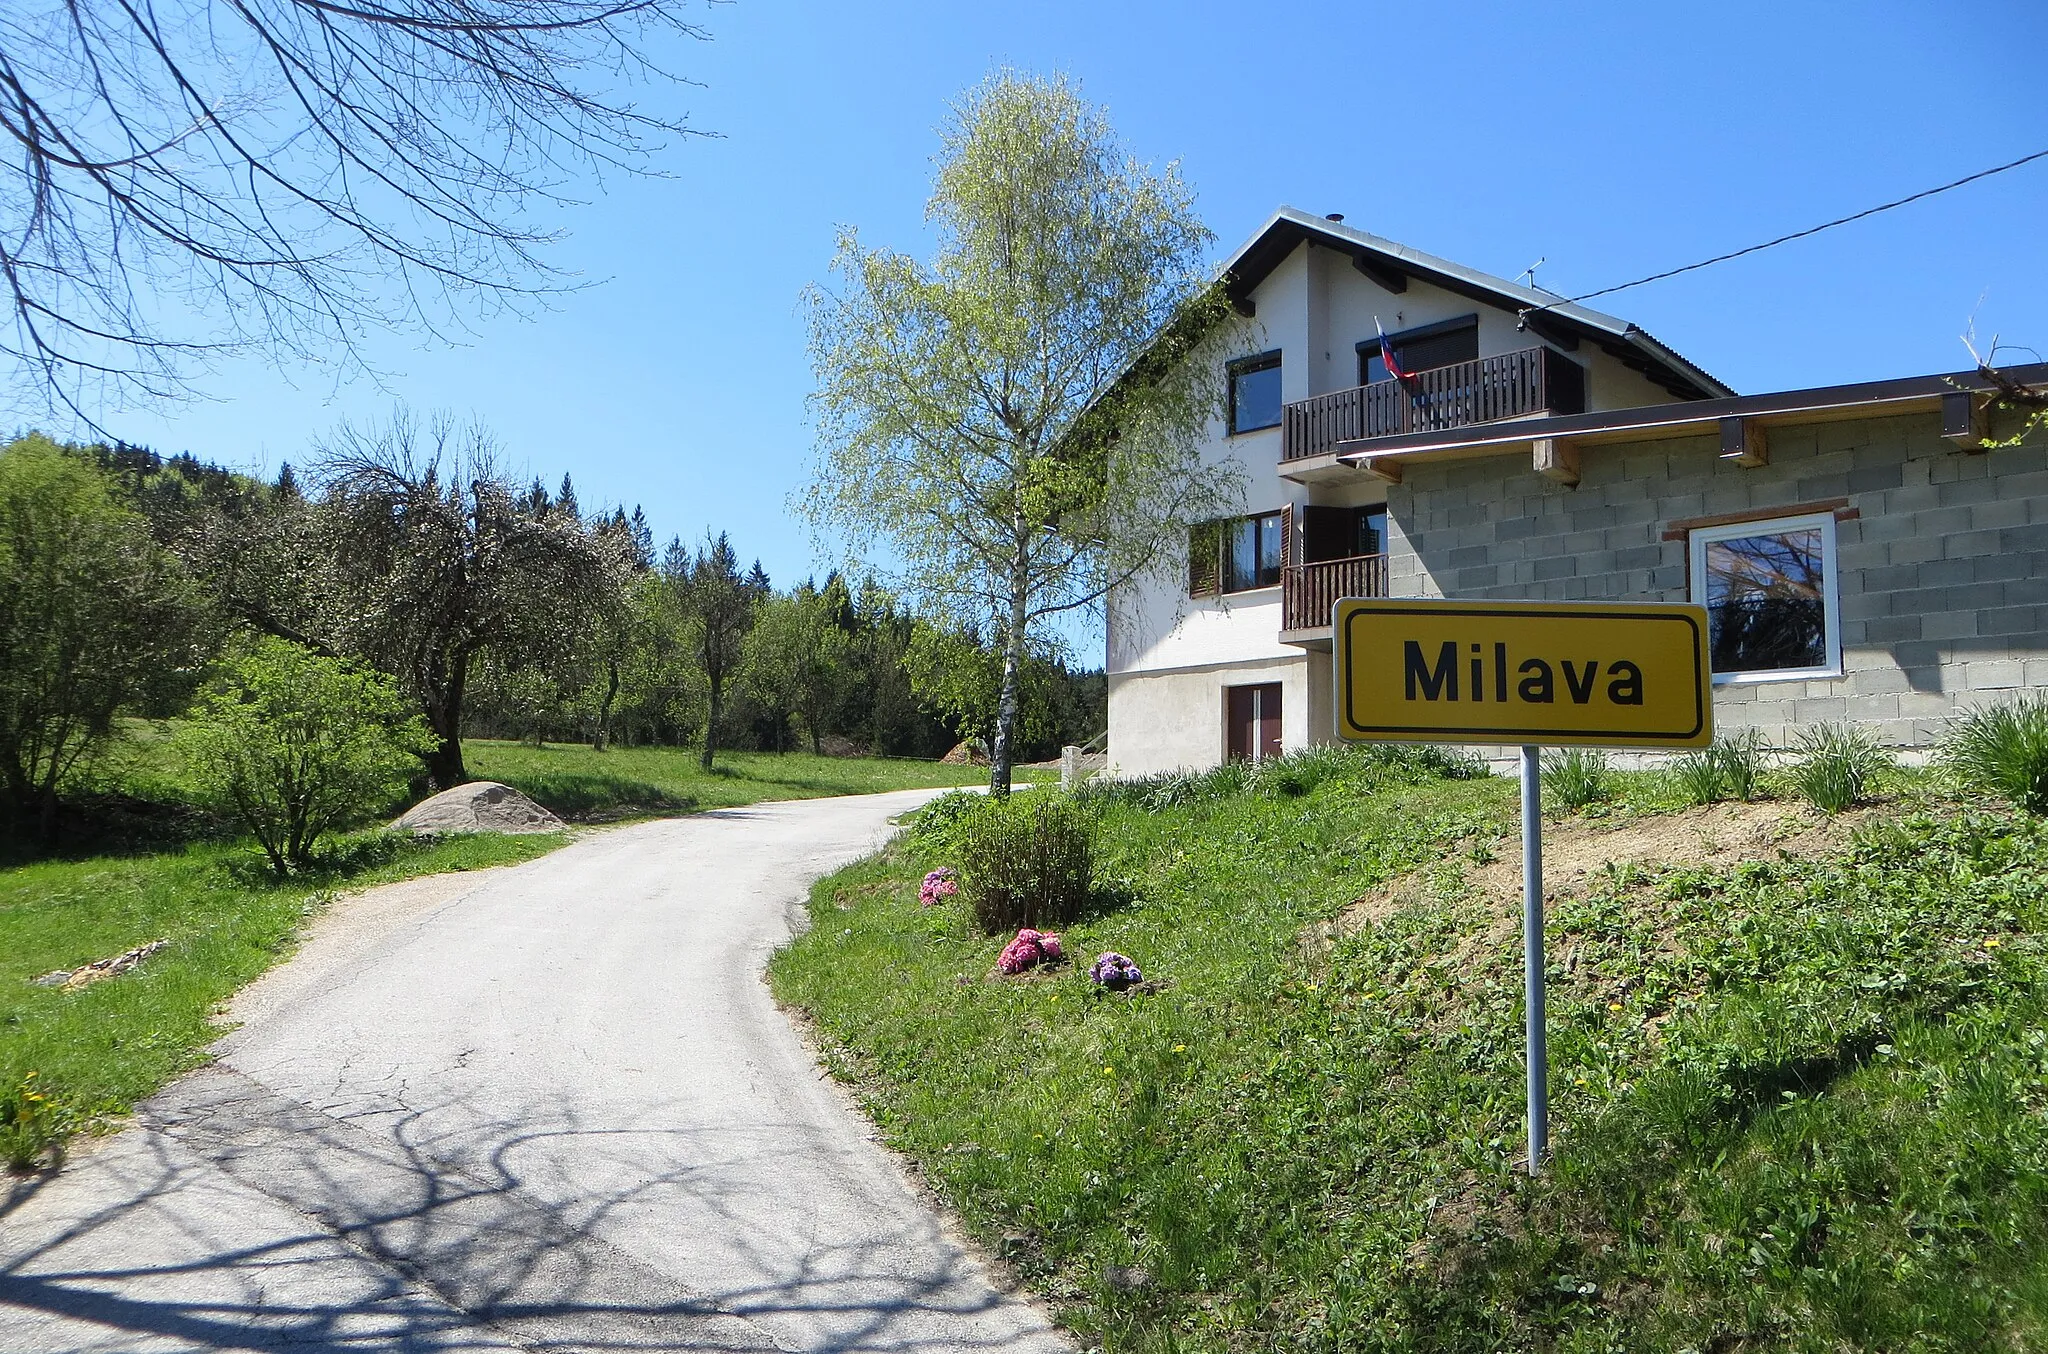 Photo showing: Milava, Municipality of Cerknica, Slovenia